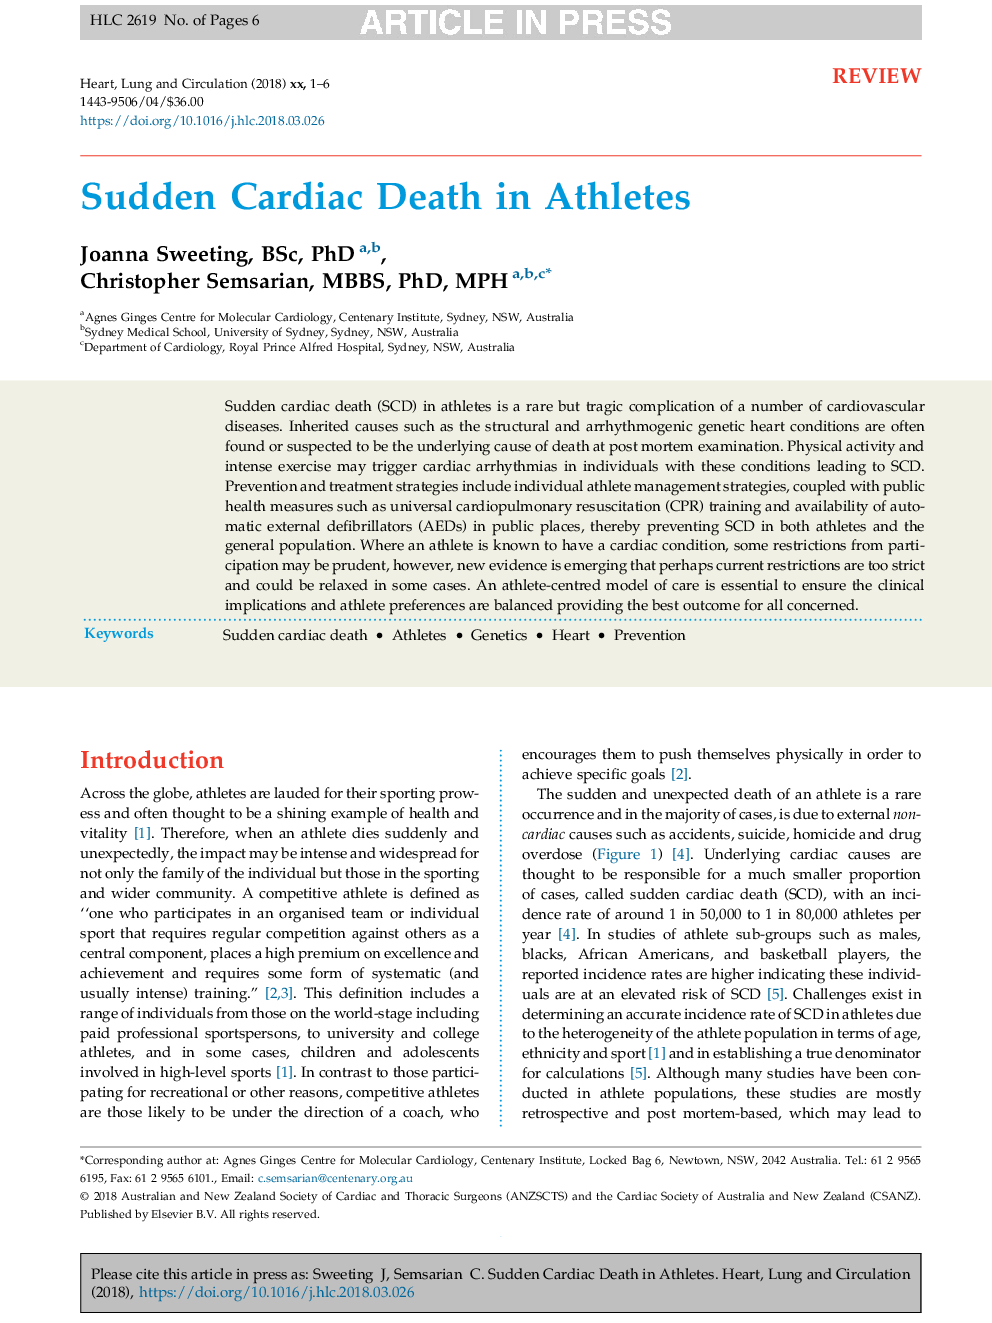 Sudden Cardiac Death in Athletes